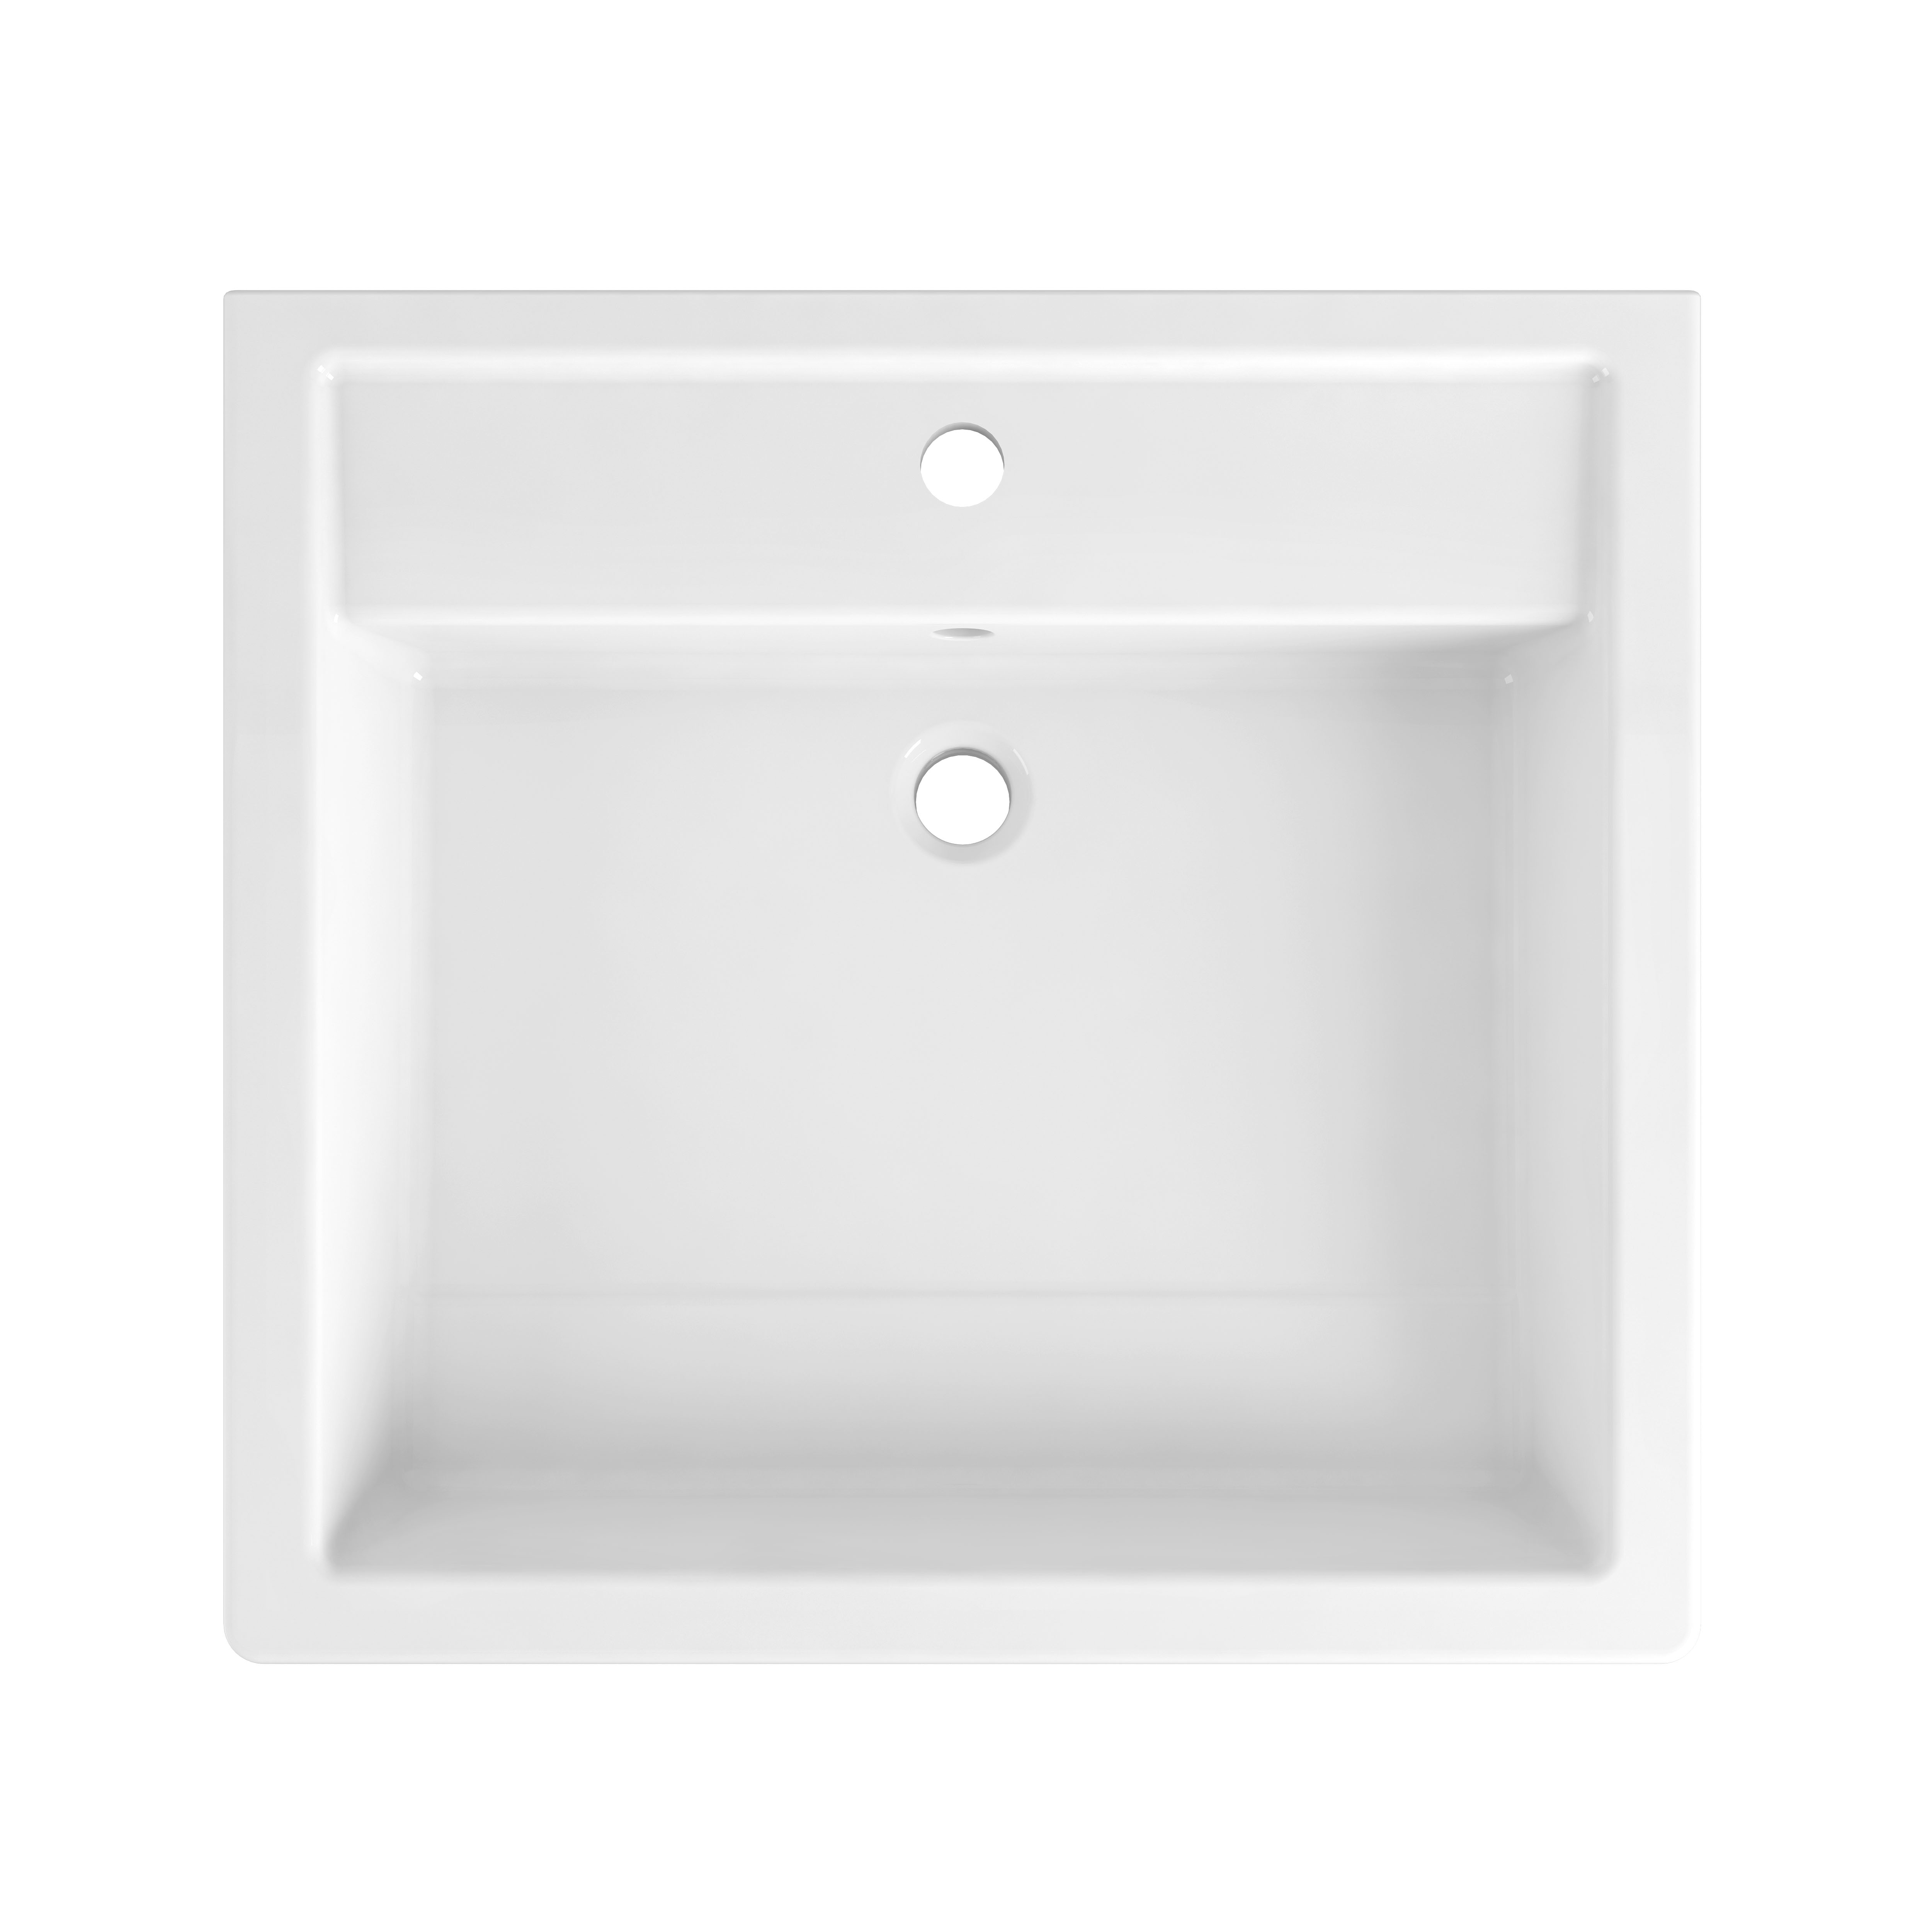 Cossu 24 in. Pedestal Bathroom Sink, Single Hole